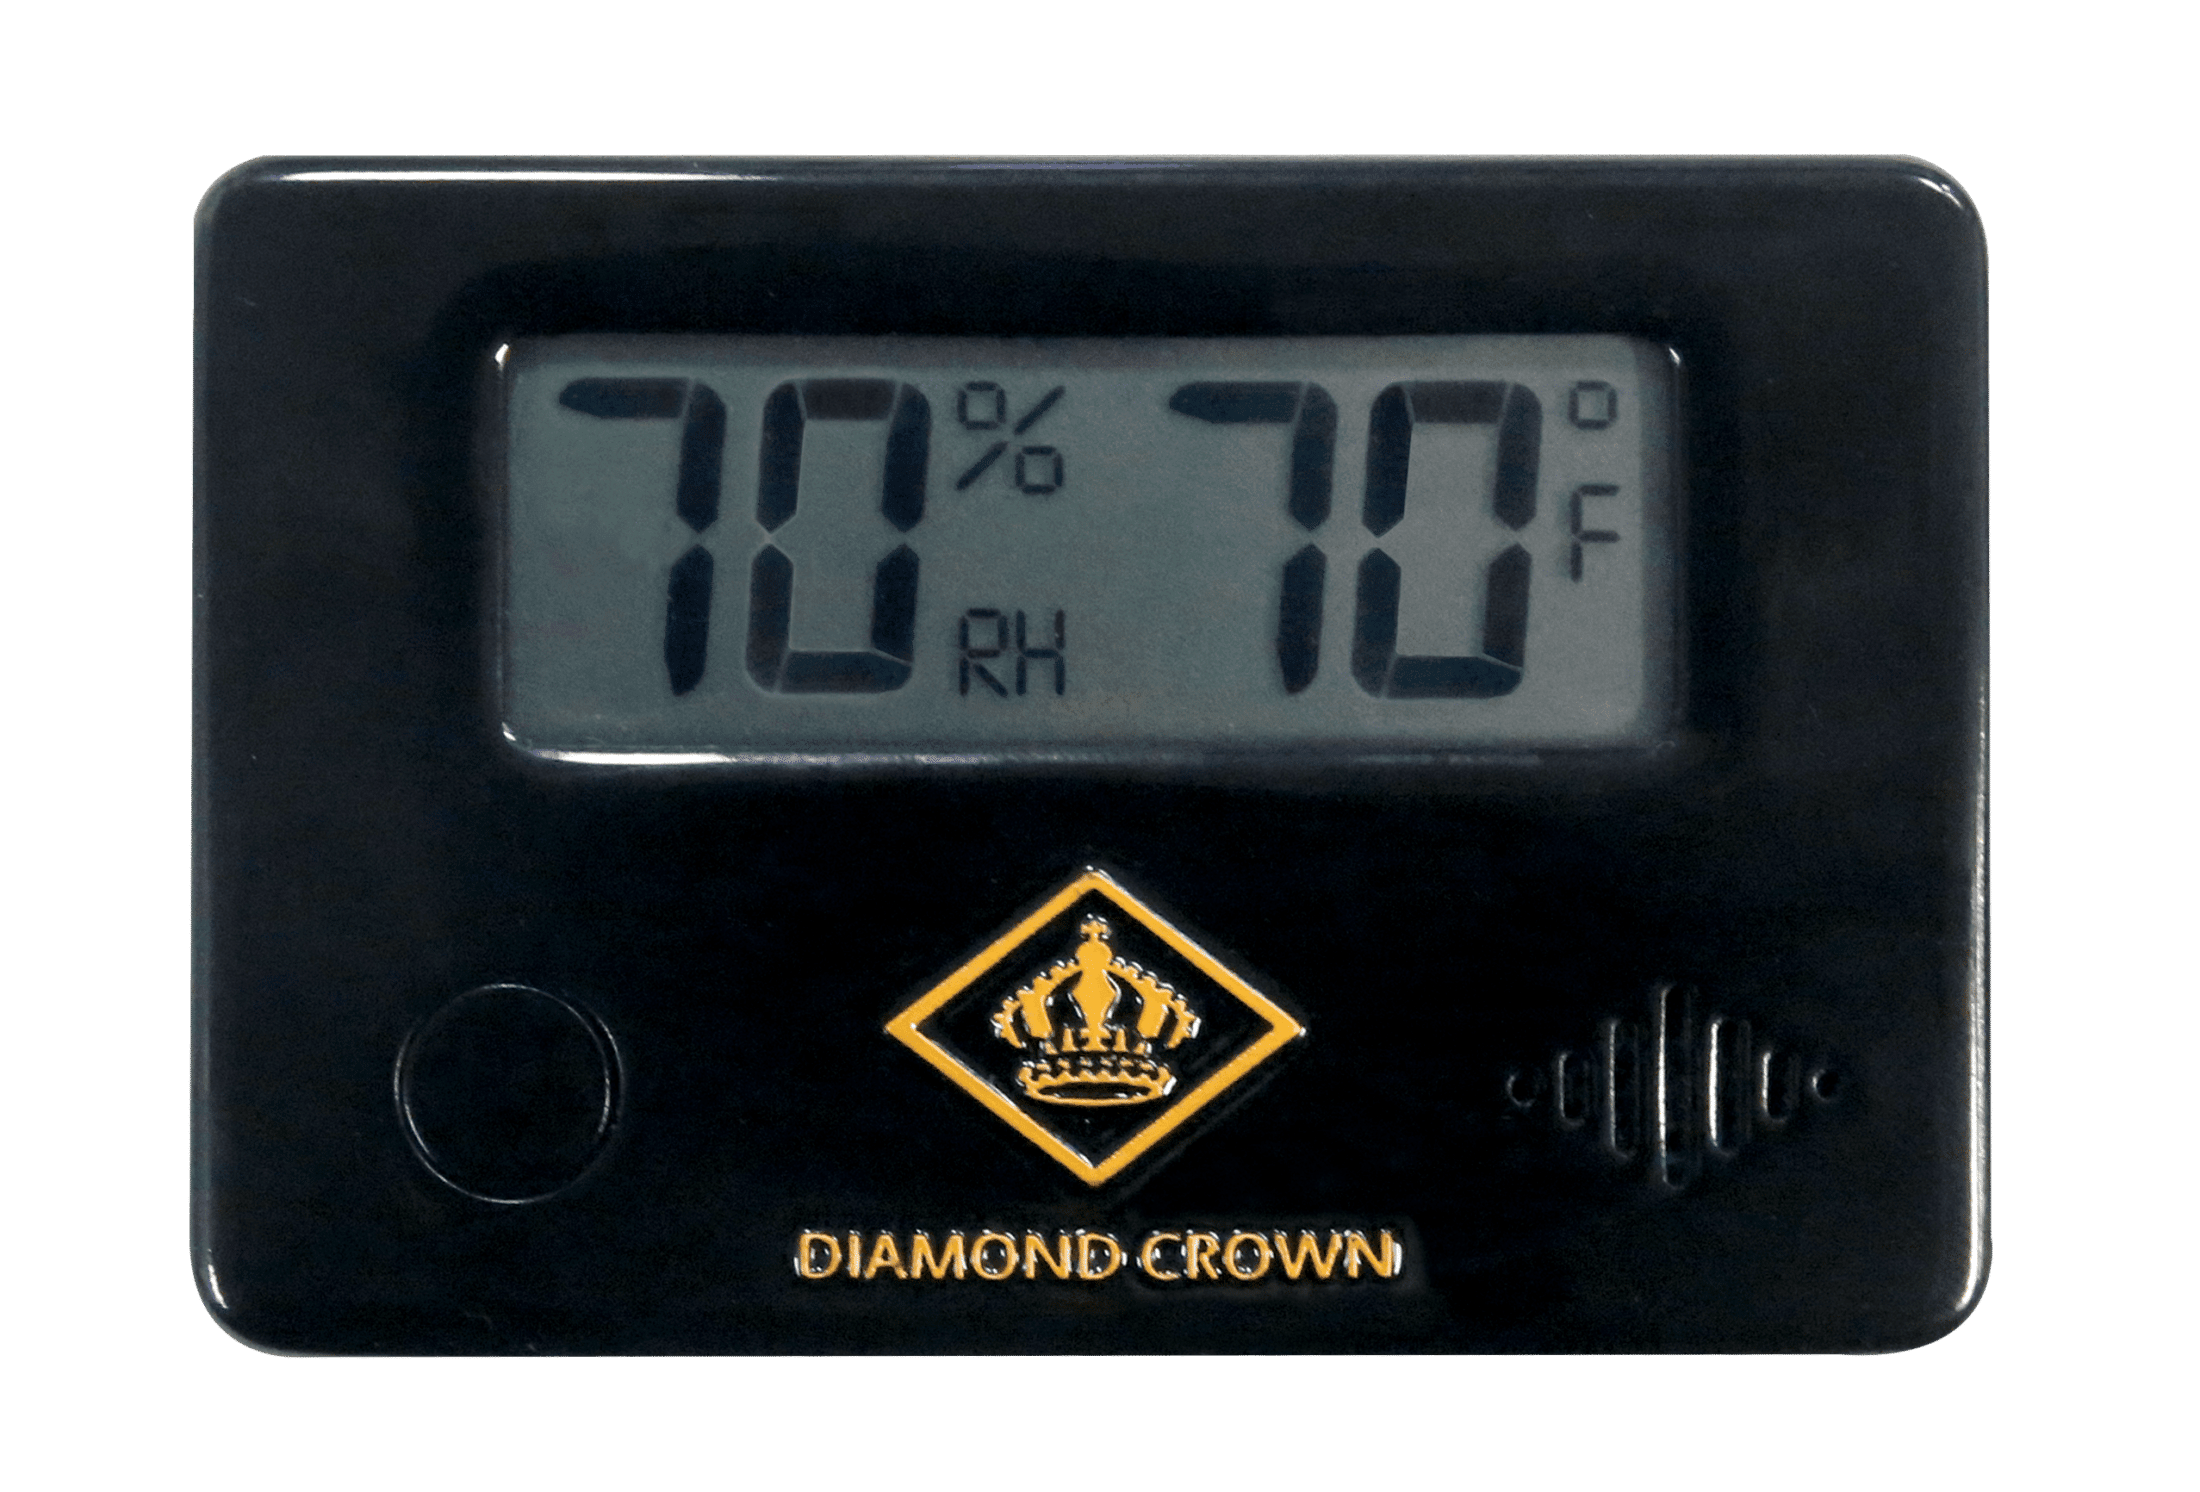 Diamond Crown Accessory Digital Hygrometer